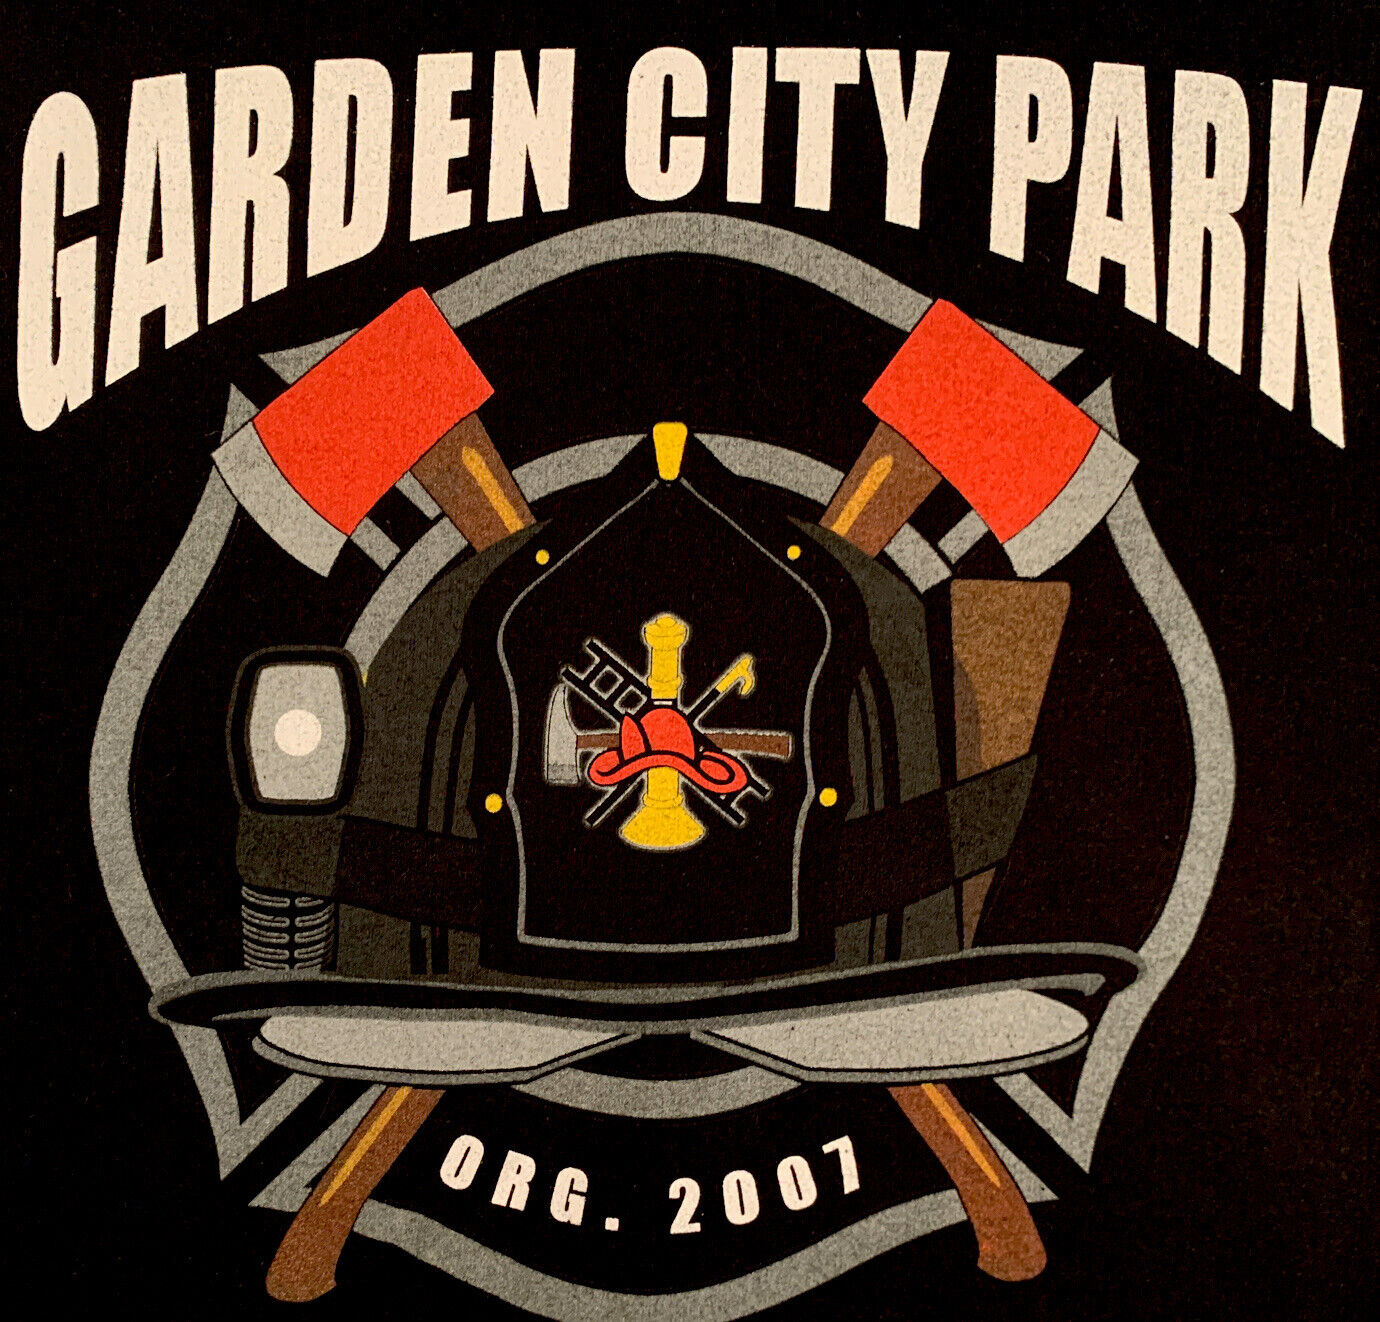 Garden City Park Fire Department Nassau Long Island NY Sweatshirt Sz L FDNY